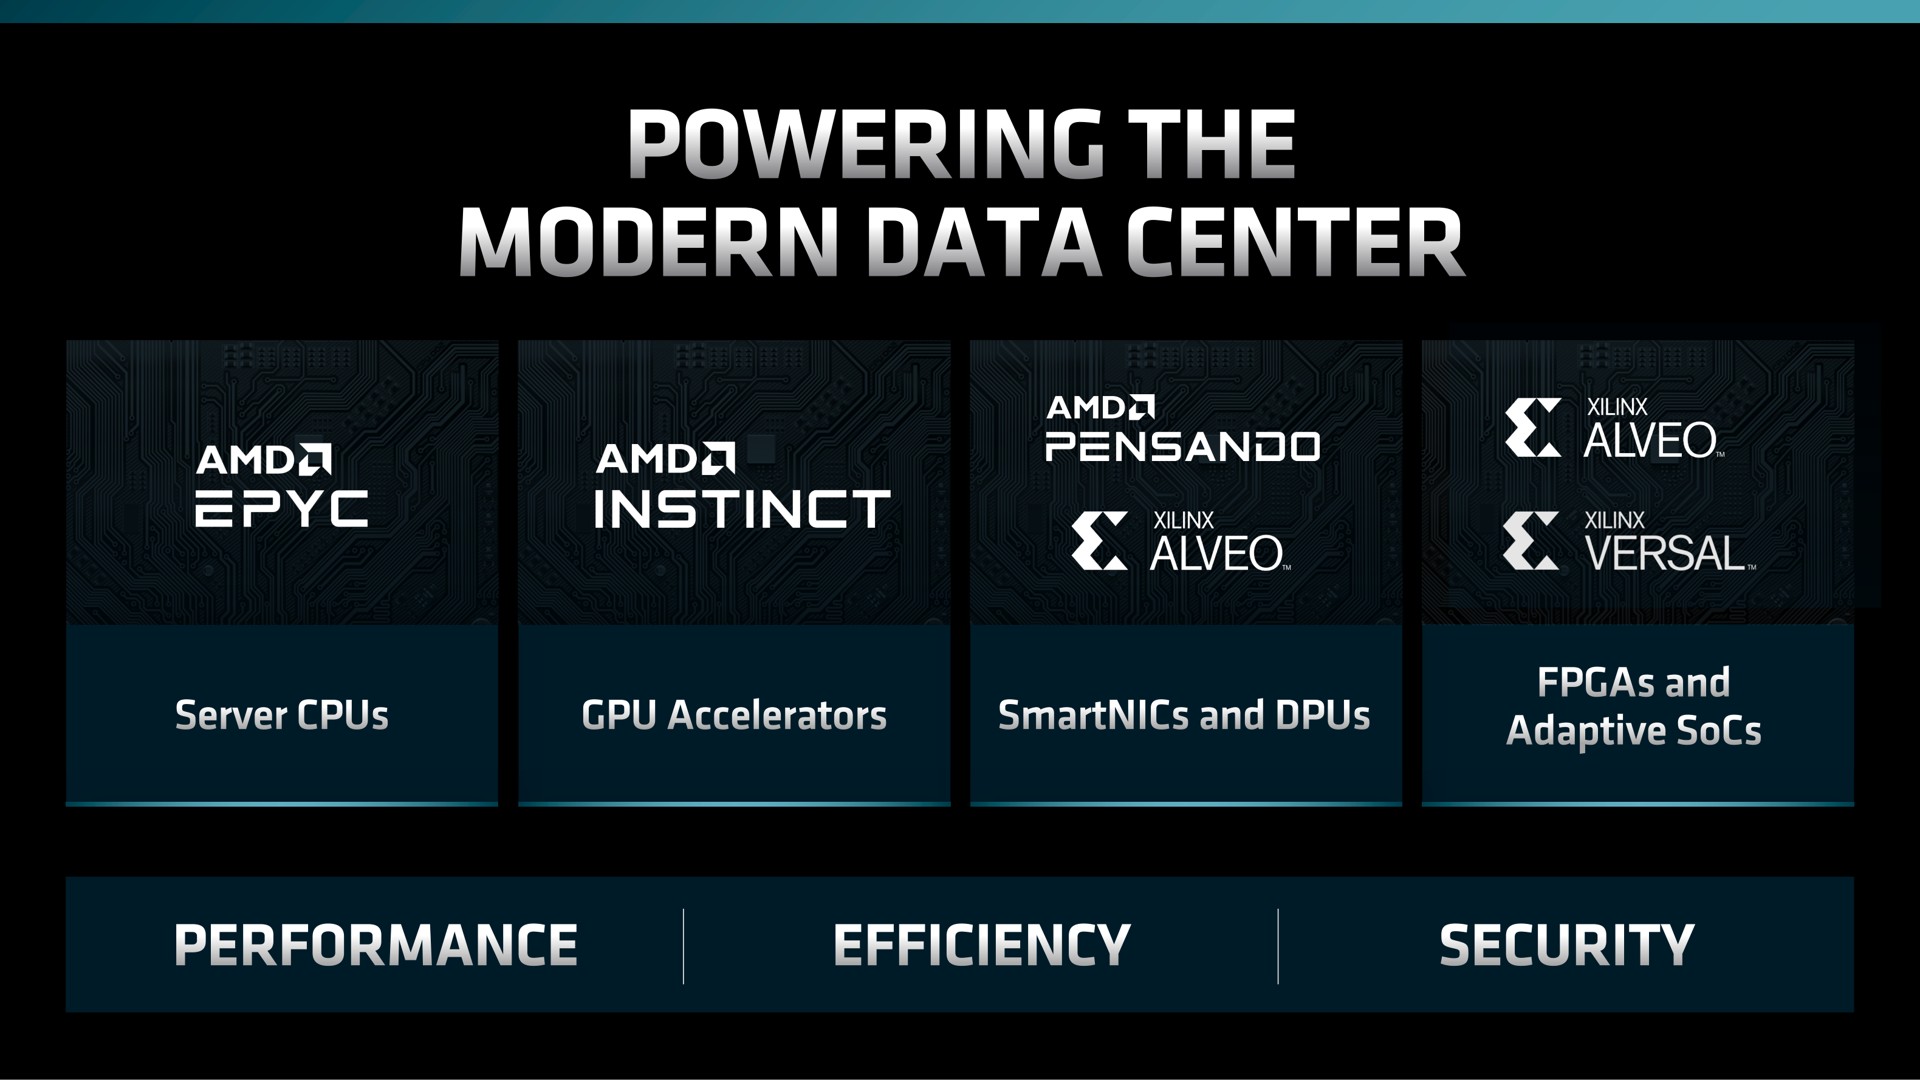 modern data center ava performance security | AMD